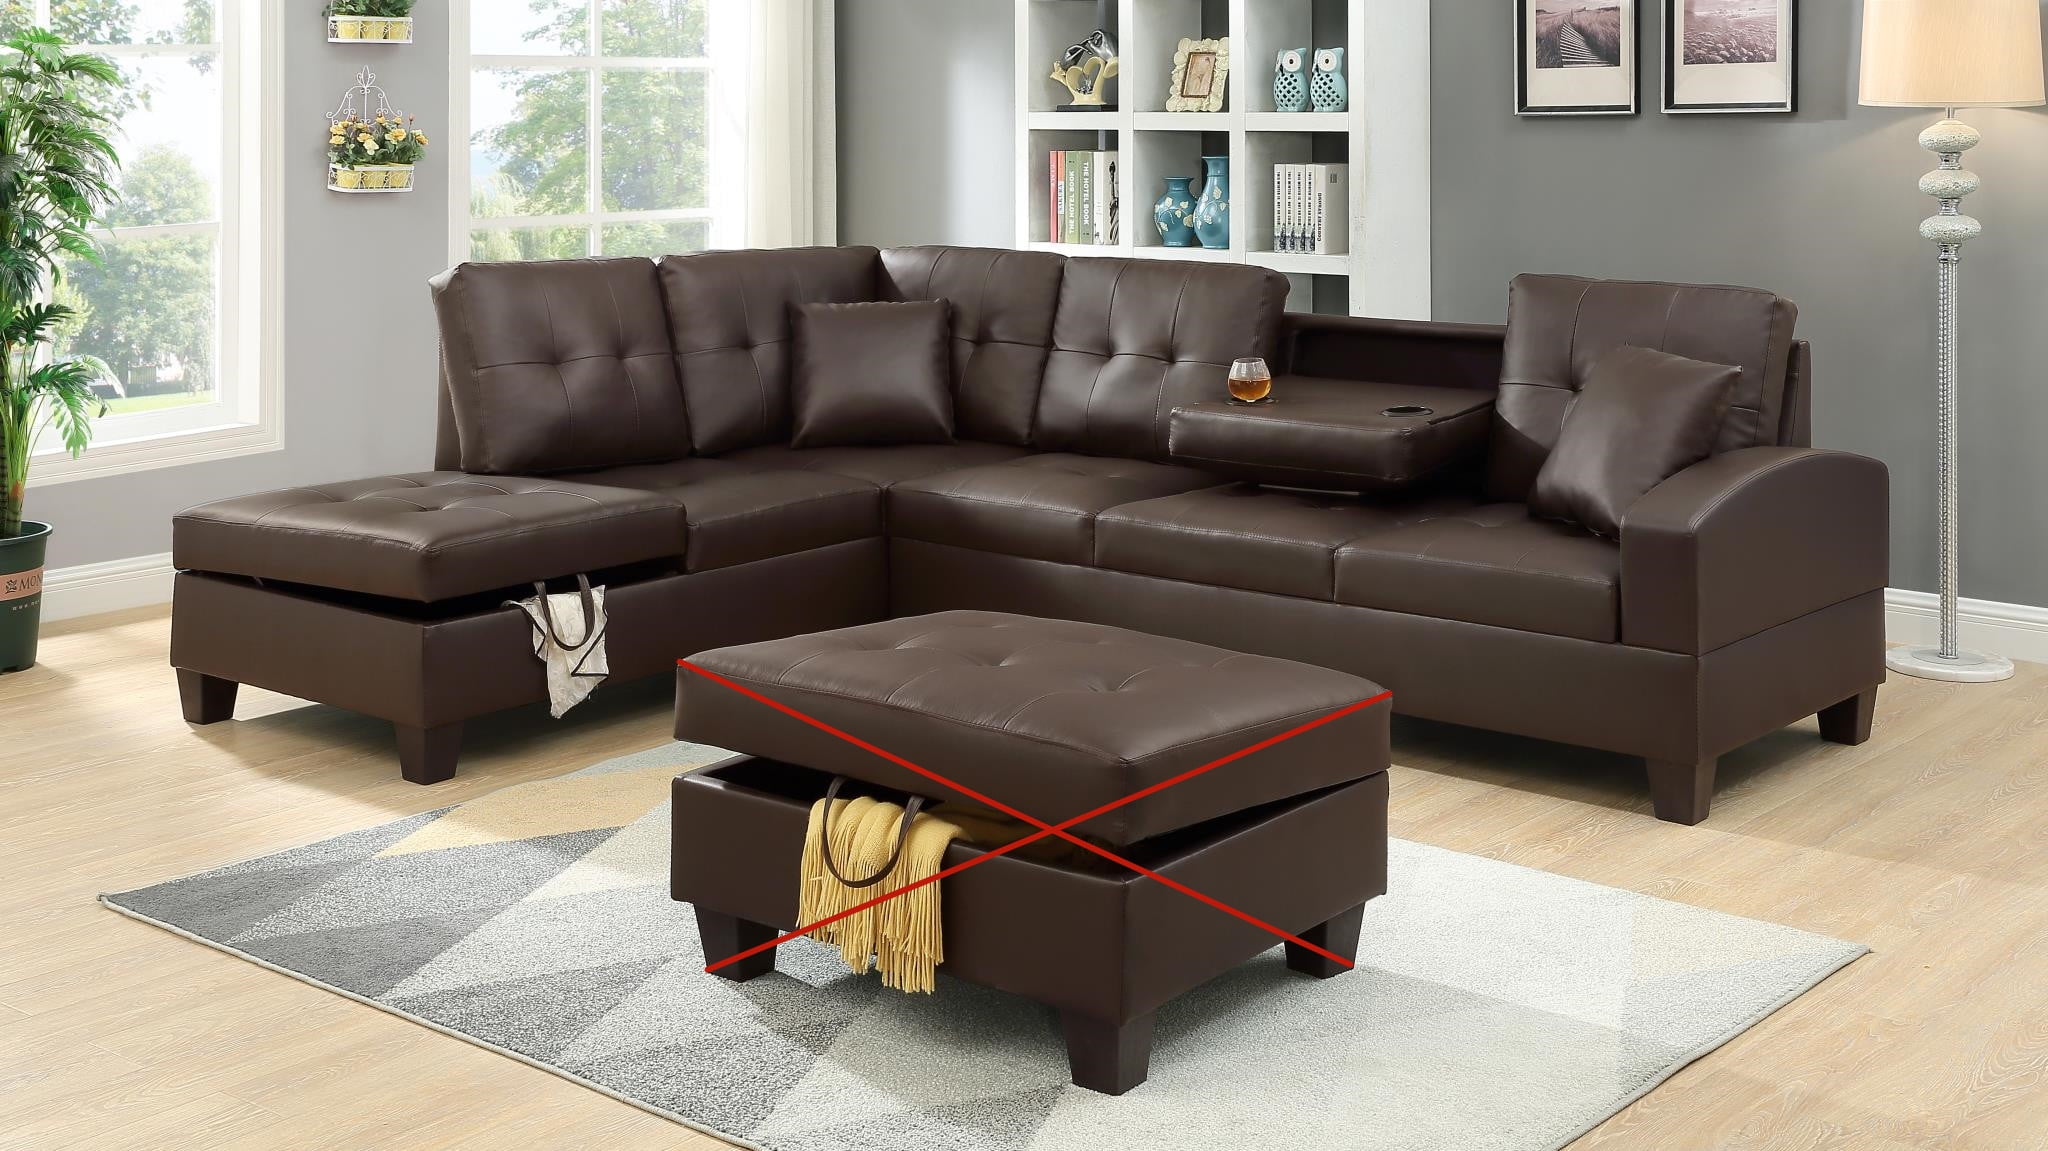 GTU Furniture Pu Leather Living Room Irreversible Living